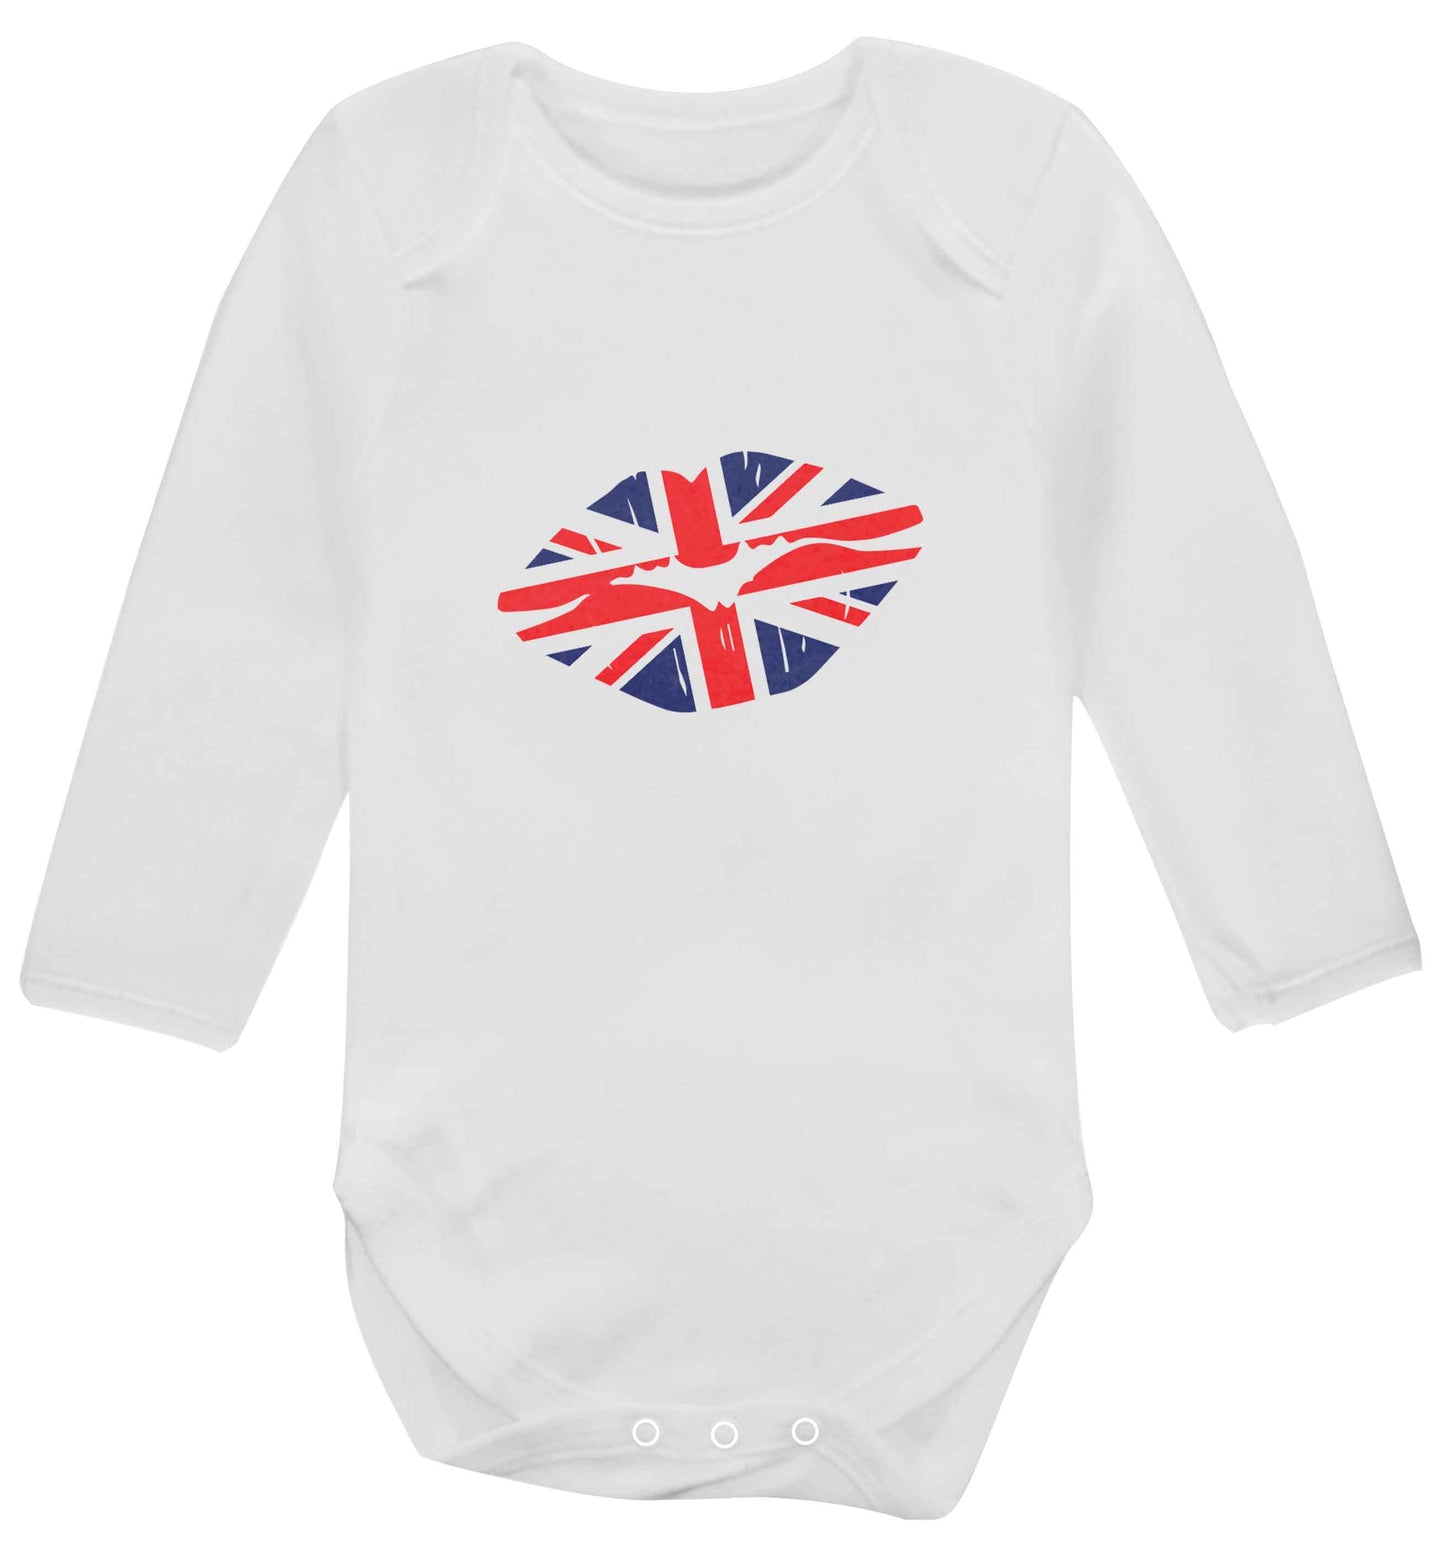 British flag kiss baby vest long sleeved white 6-12 months